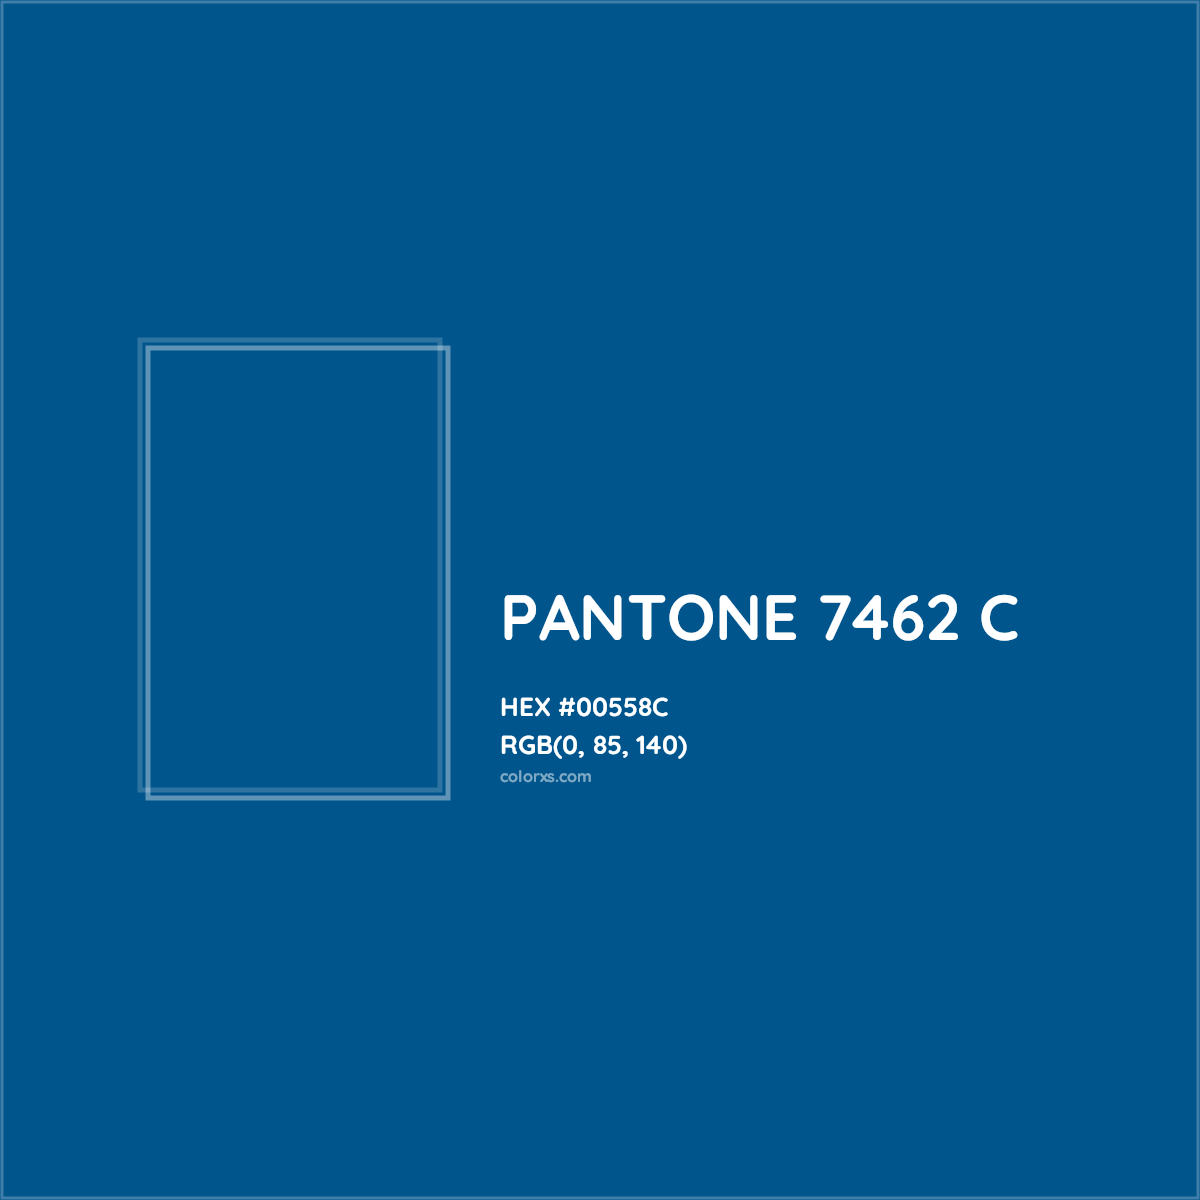 HEX #00558C PANTONE 7462 C CMS Pantone PMS - Color Code